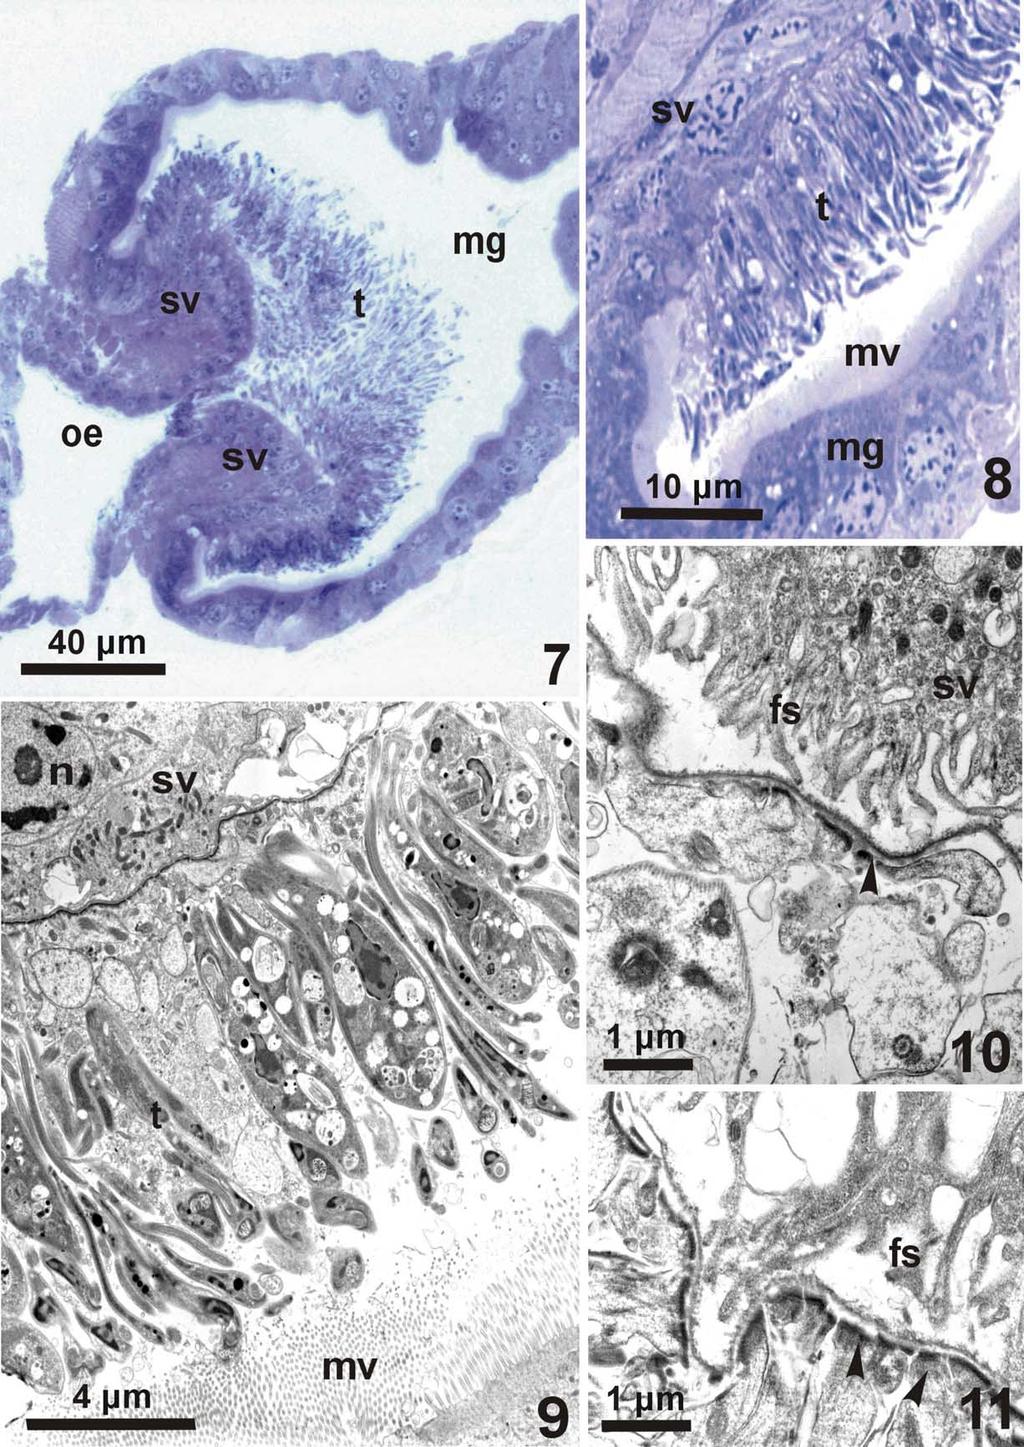 P. Volf et al. / International Journal for Parasitology 34 (2004) 1221 1227 1225 Figs. 7 11. Culex pipiens quinquefasciatus infected by Trypanosoma sp.